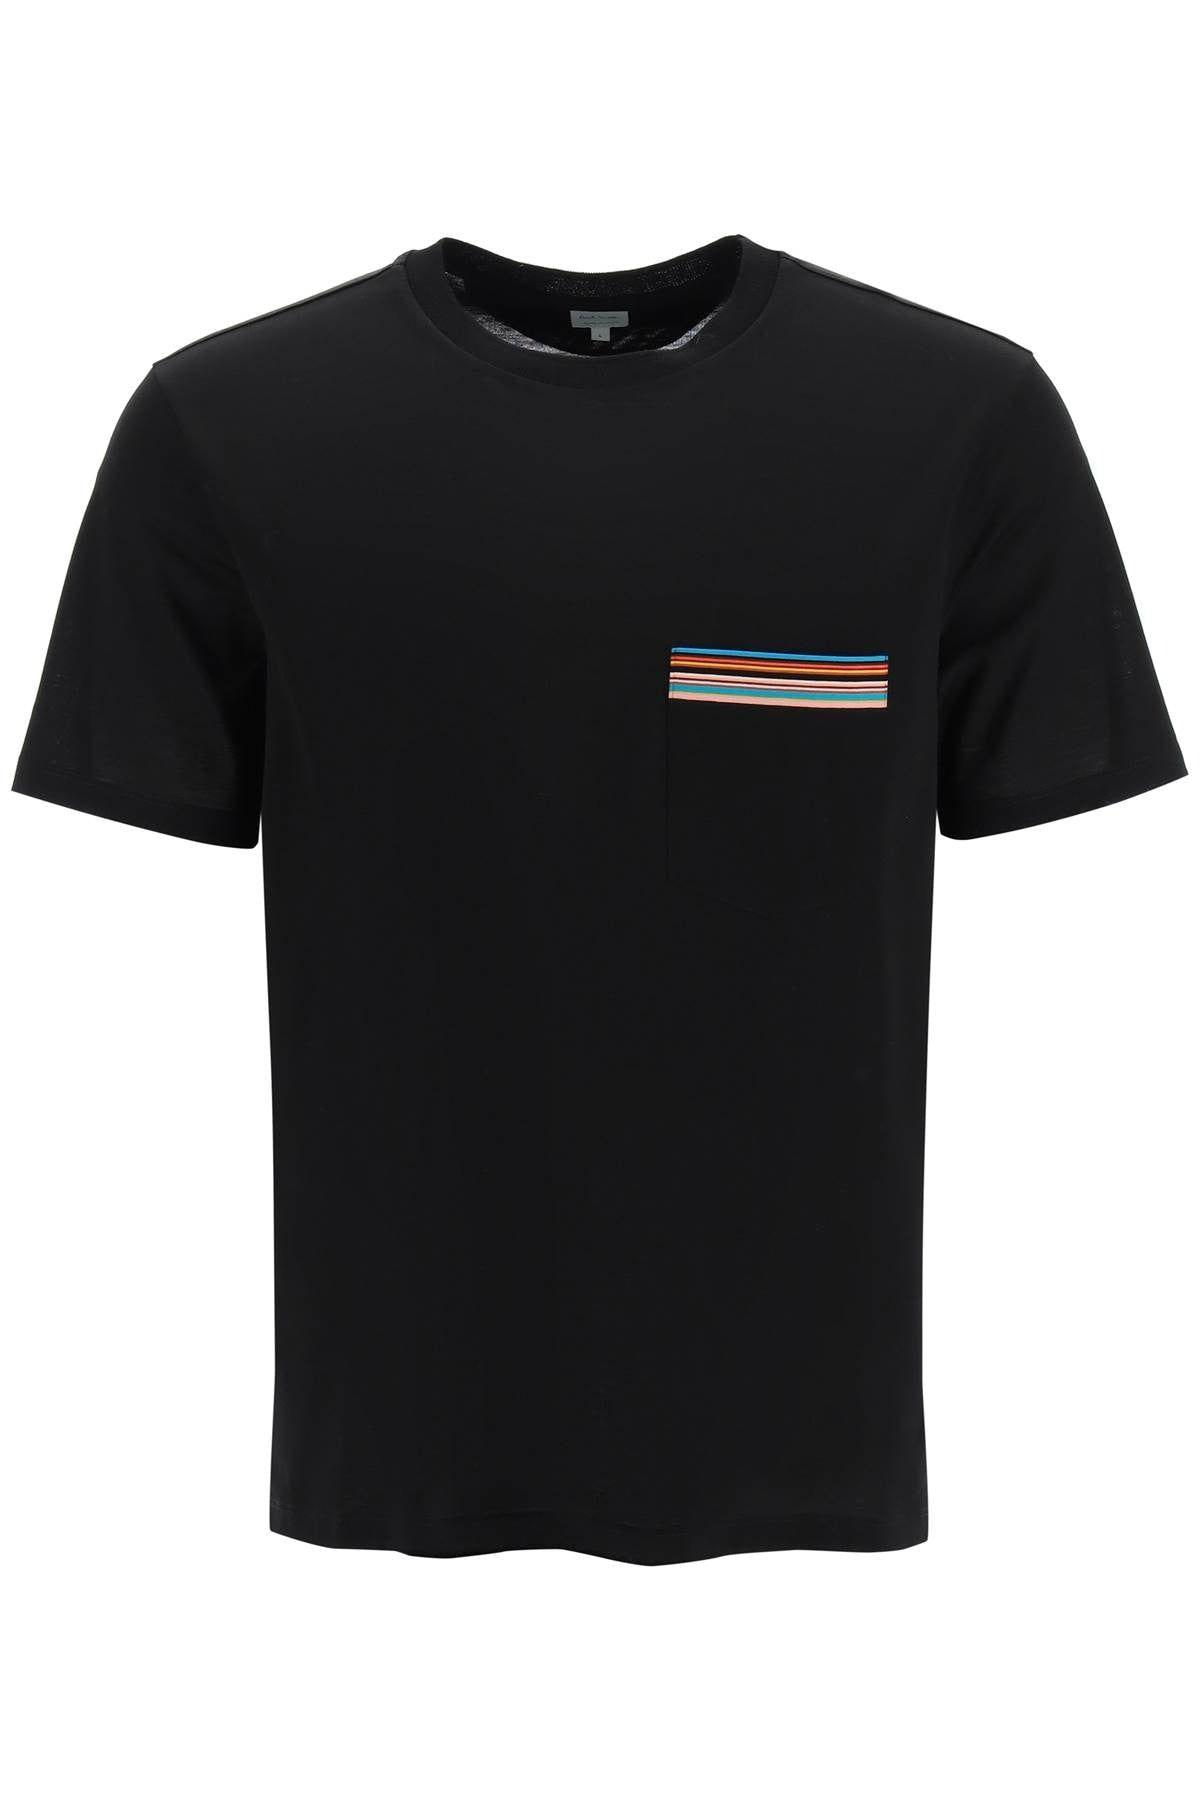 Paul Smith 'signature Stripe' Pocket T-shirt in Black for Men